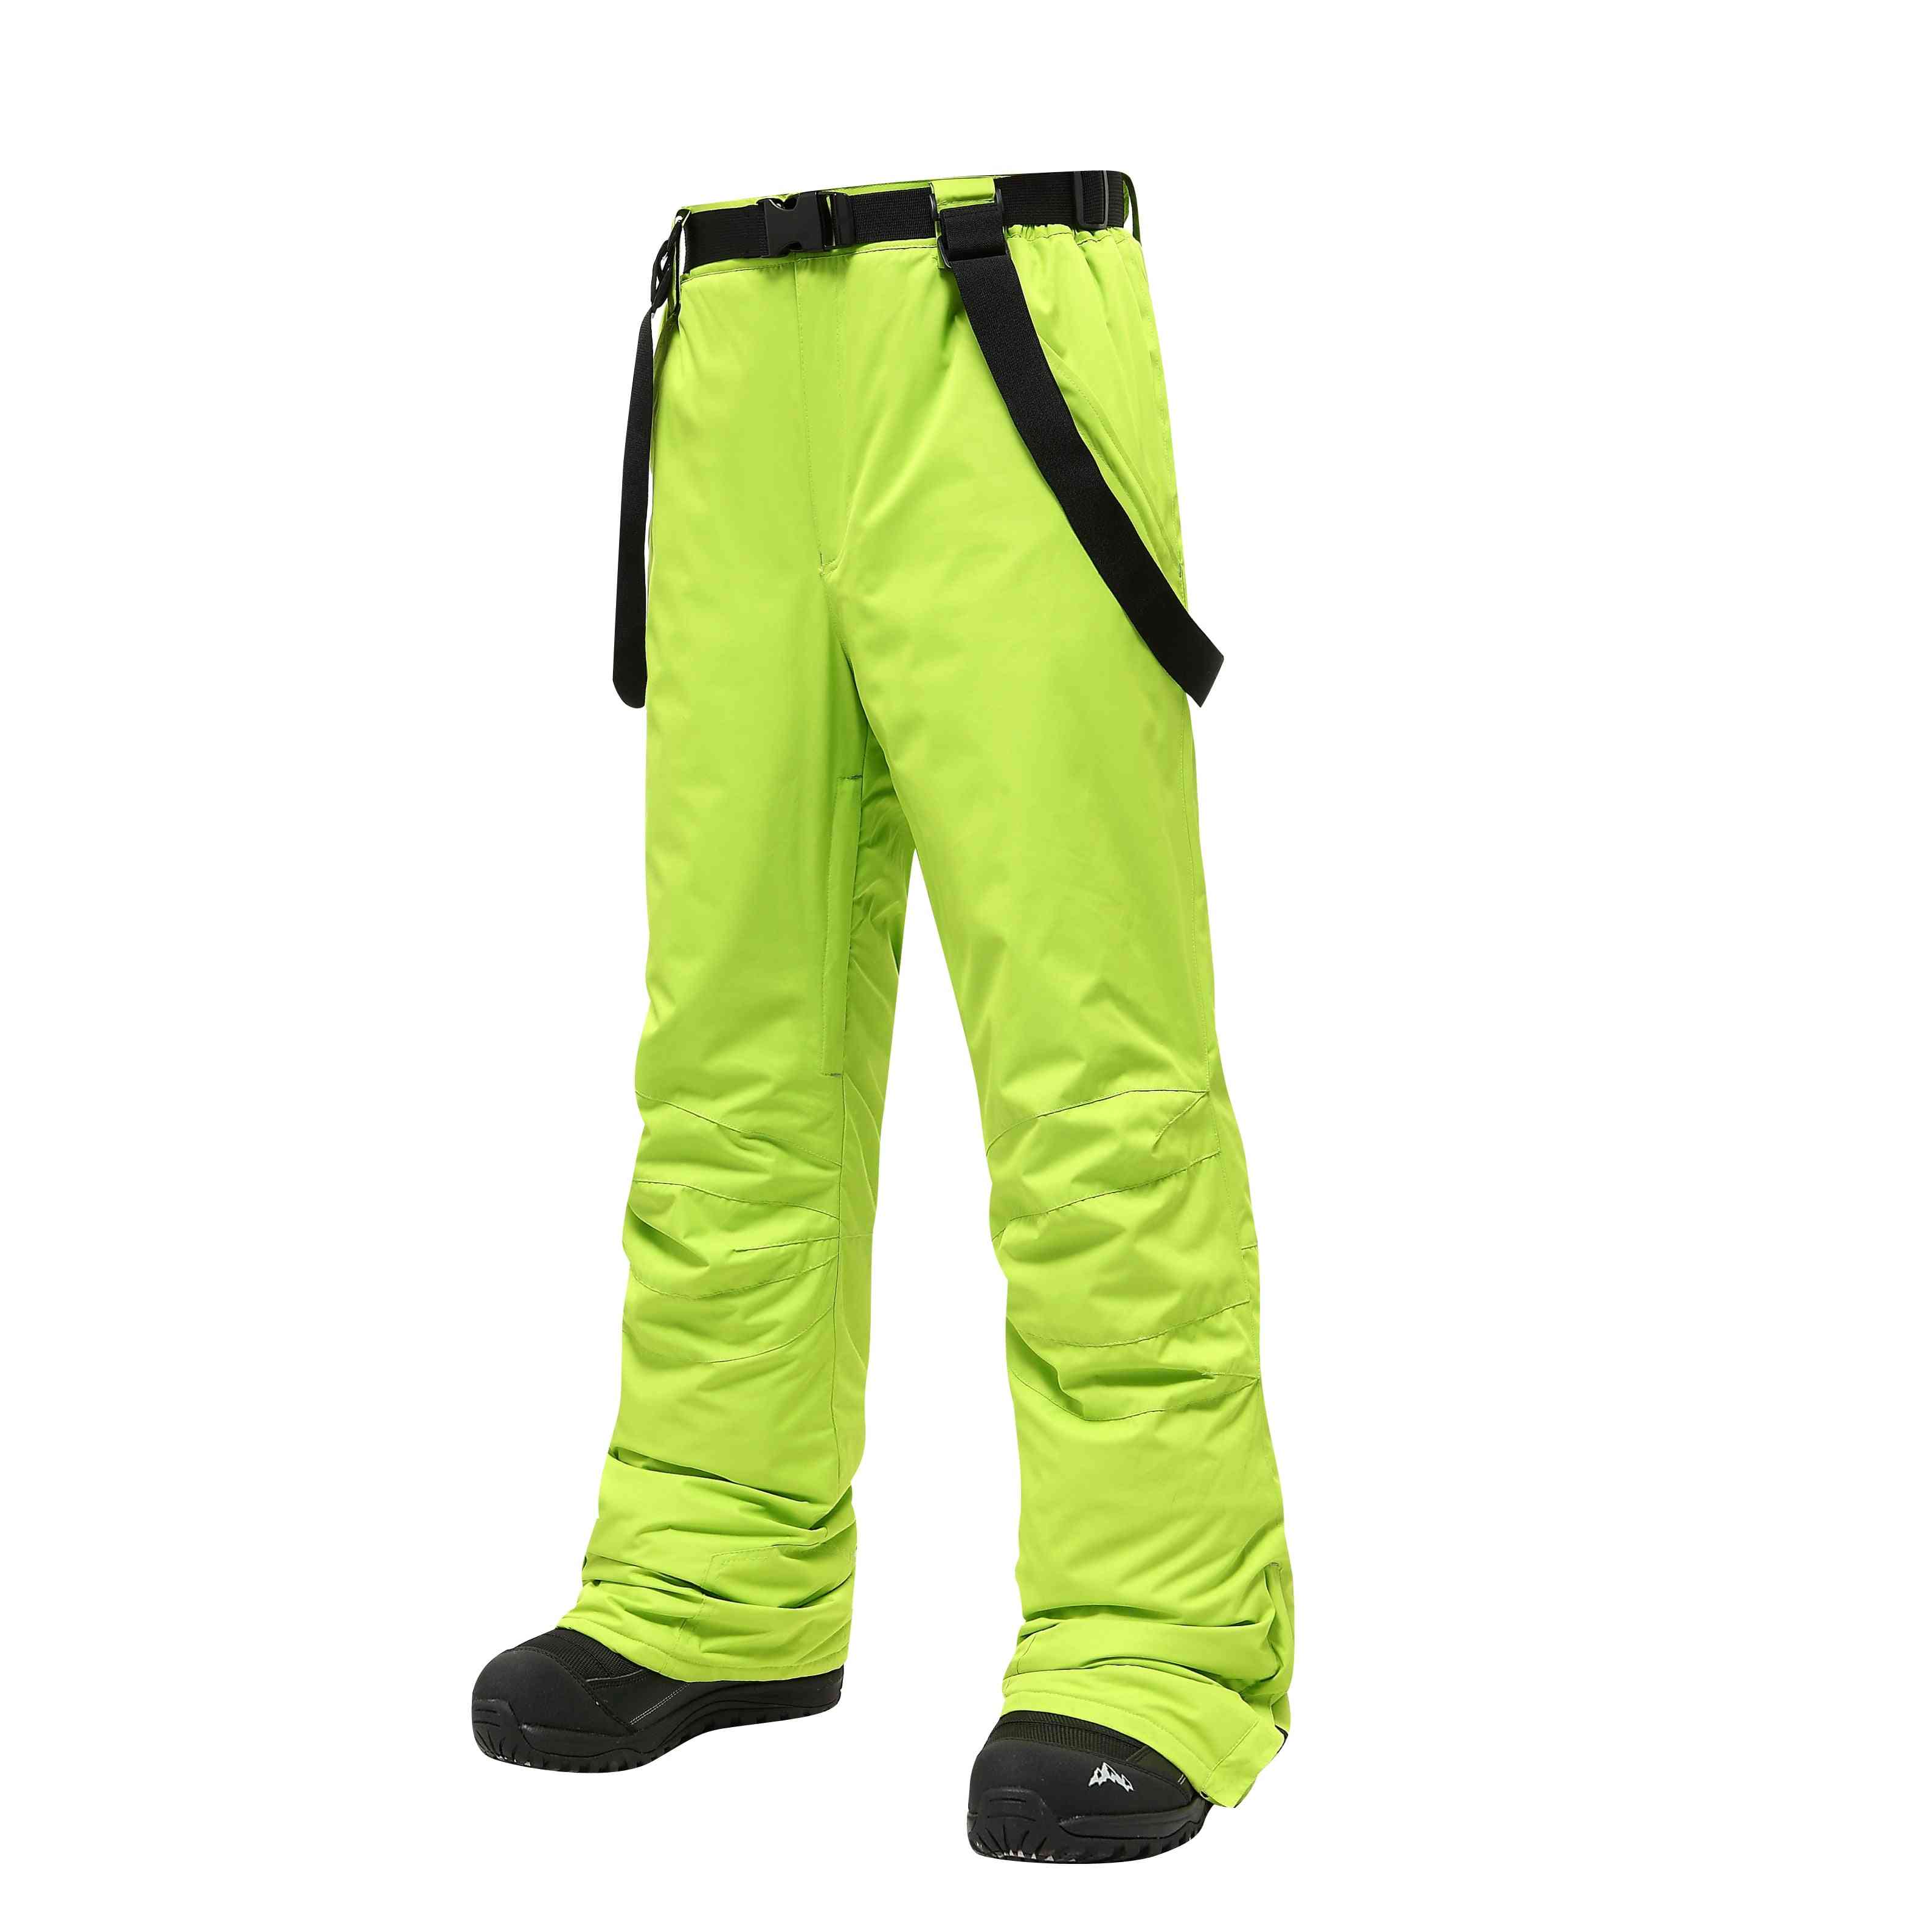 -Pantalones de snowboard para hombres de 30 grados, pantalones impermeables